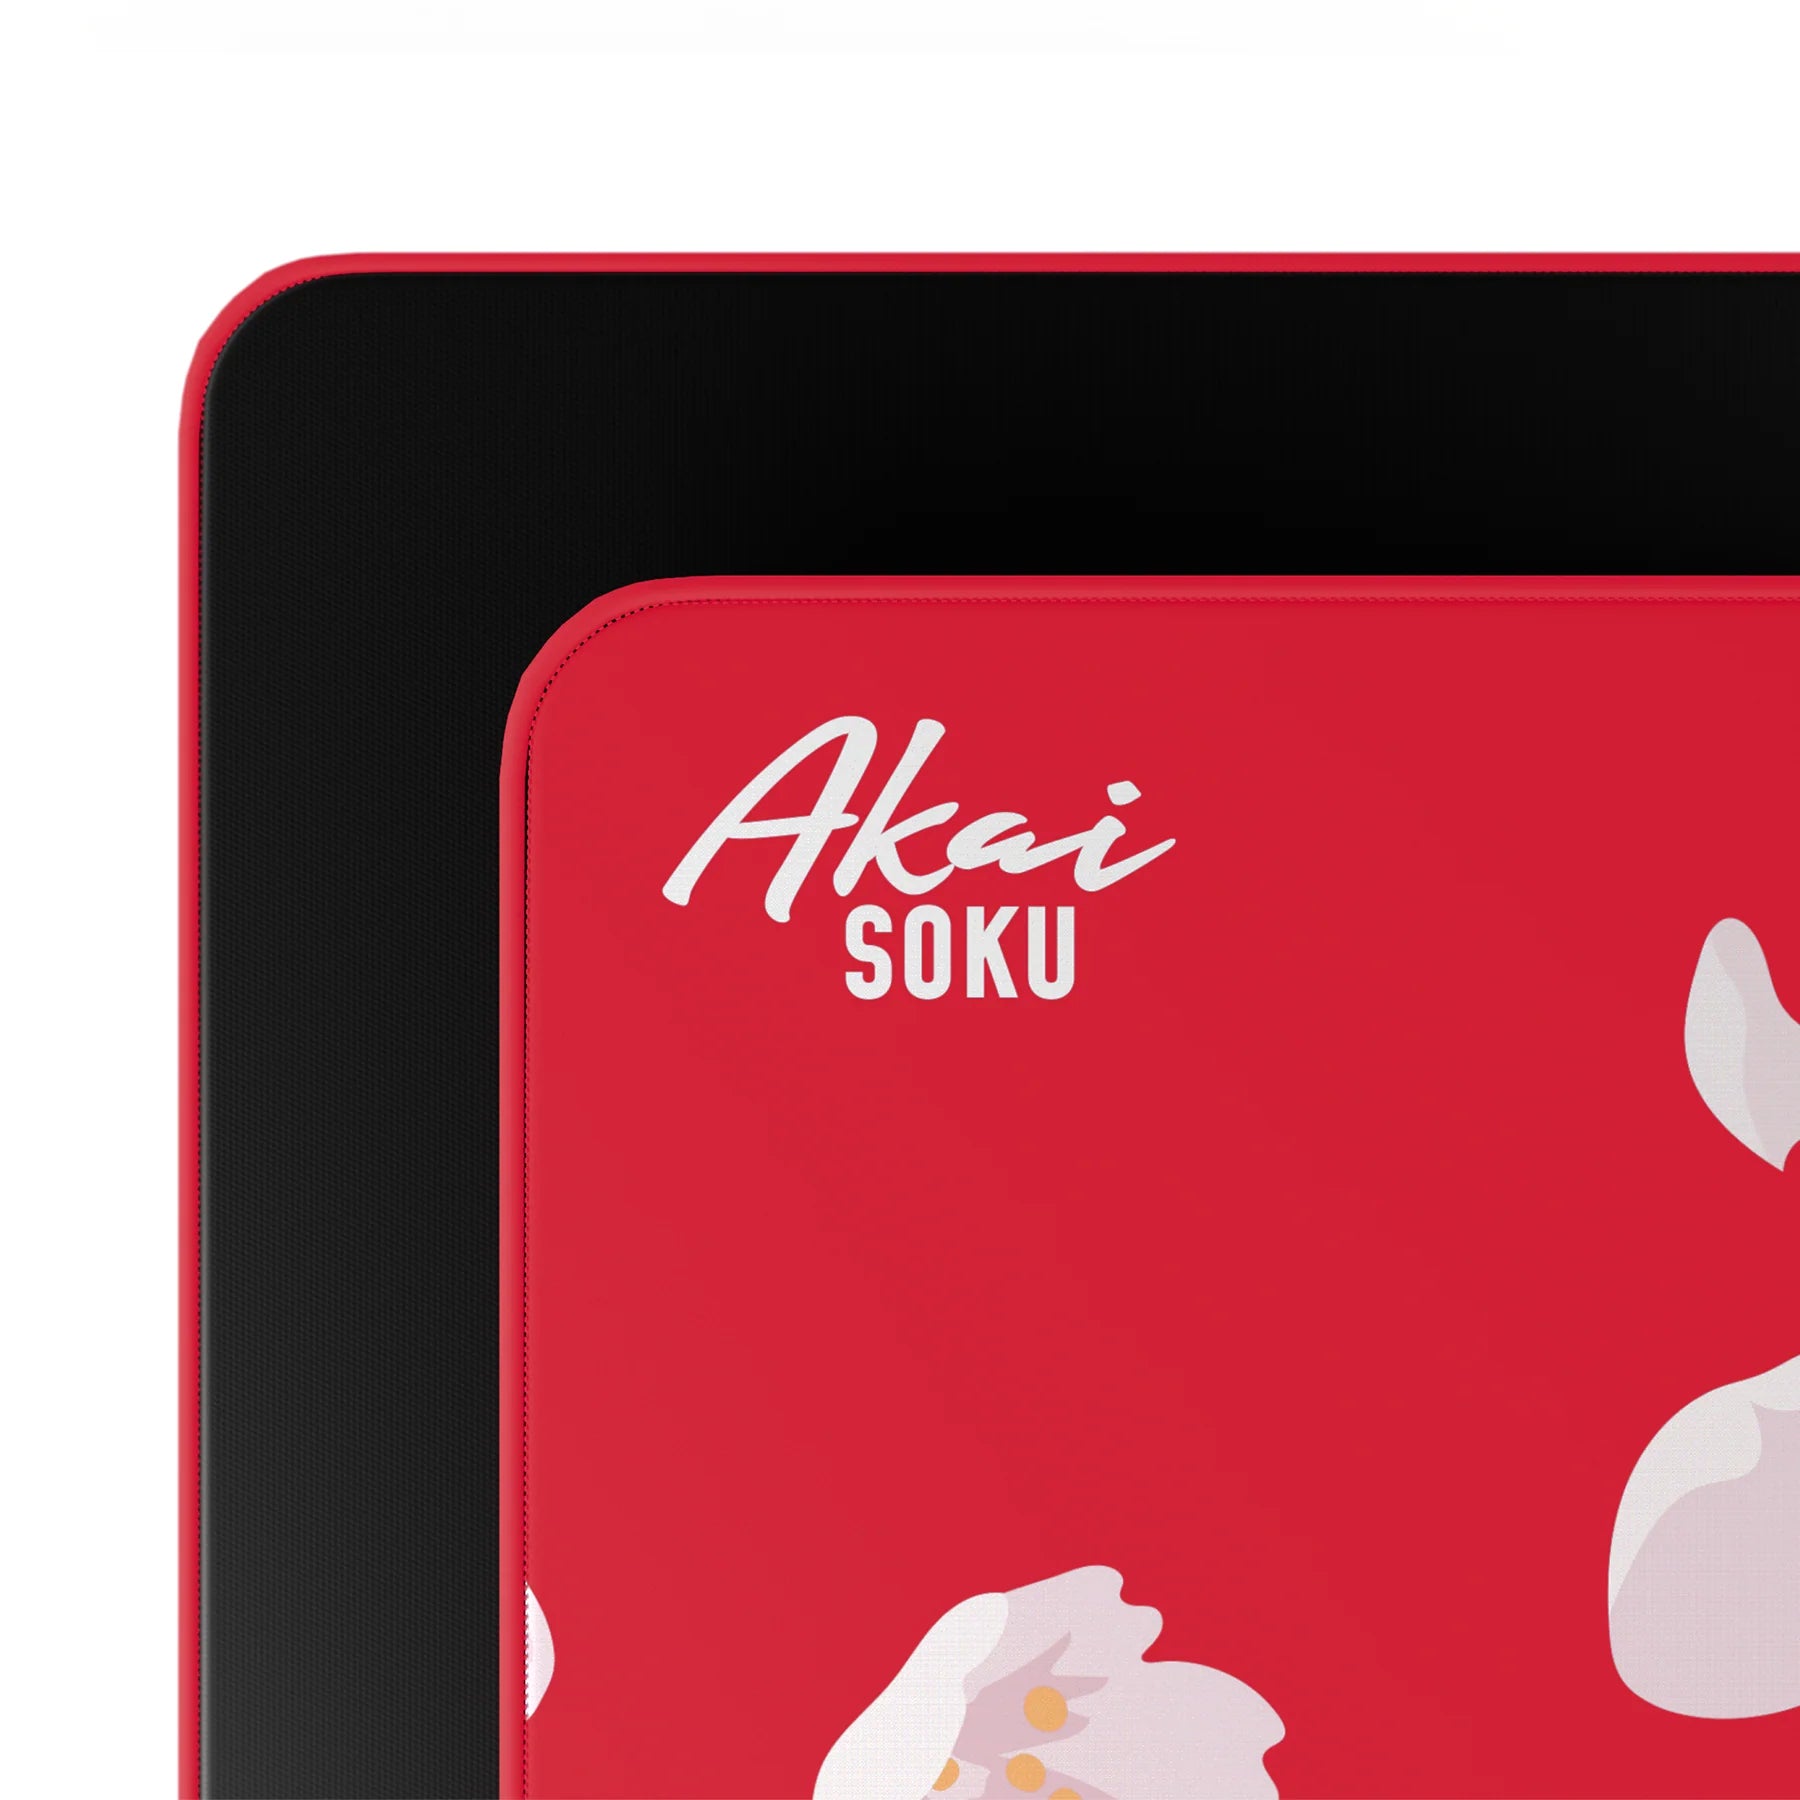 SOKU X2 AKAI - Limited Edition Control Mousepad